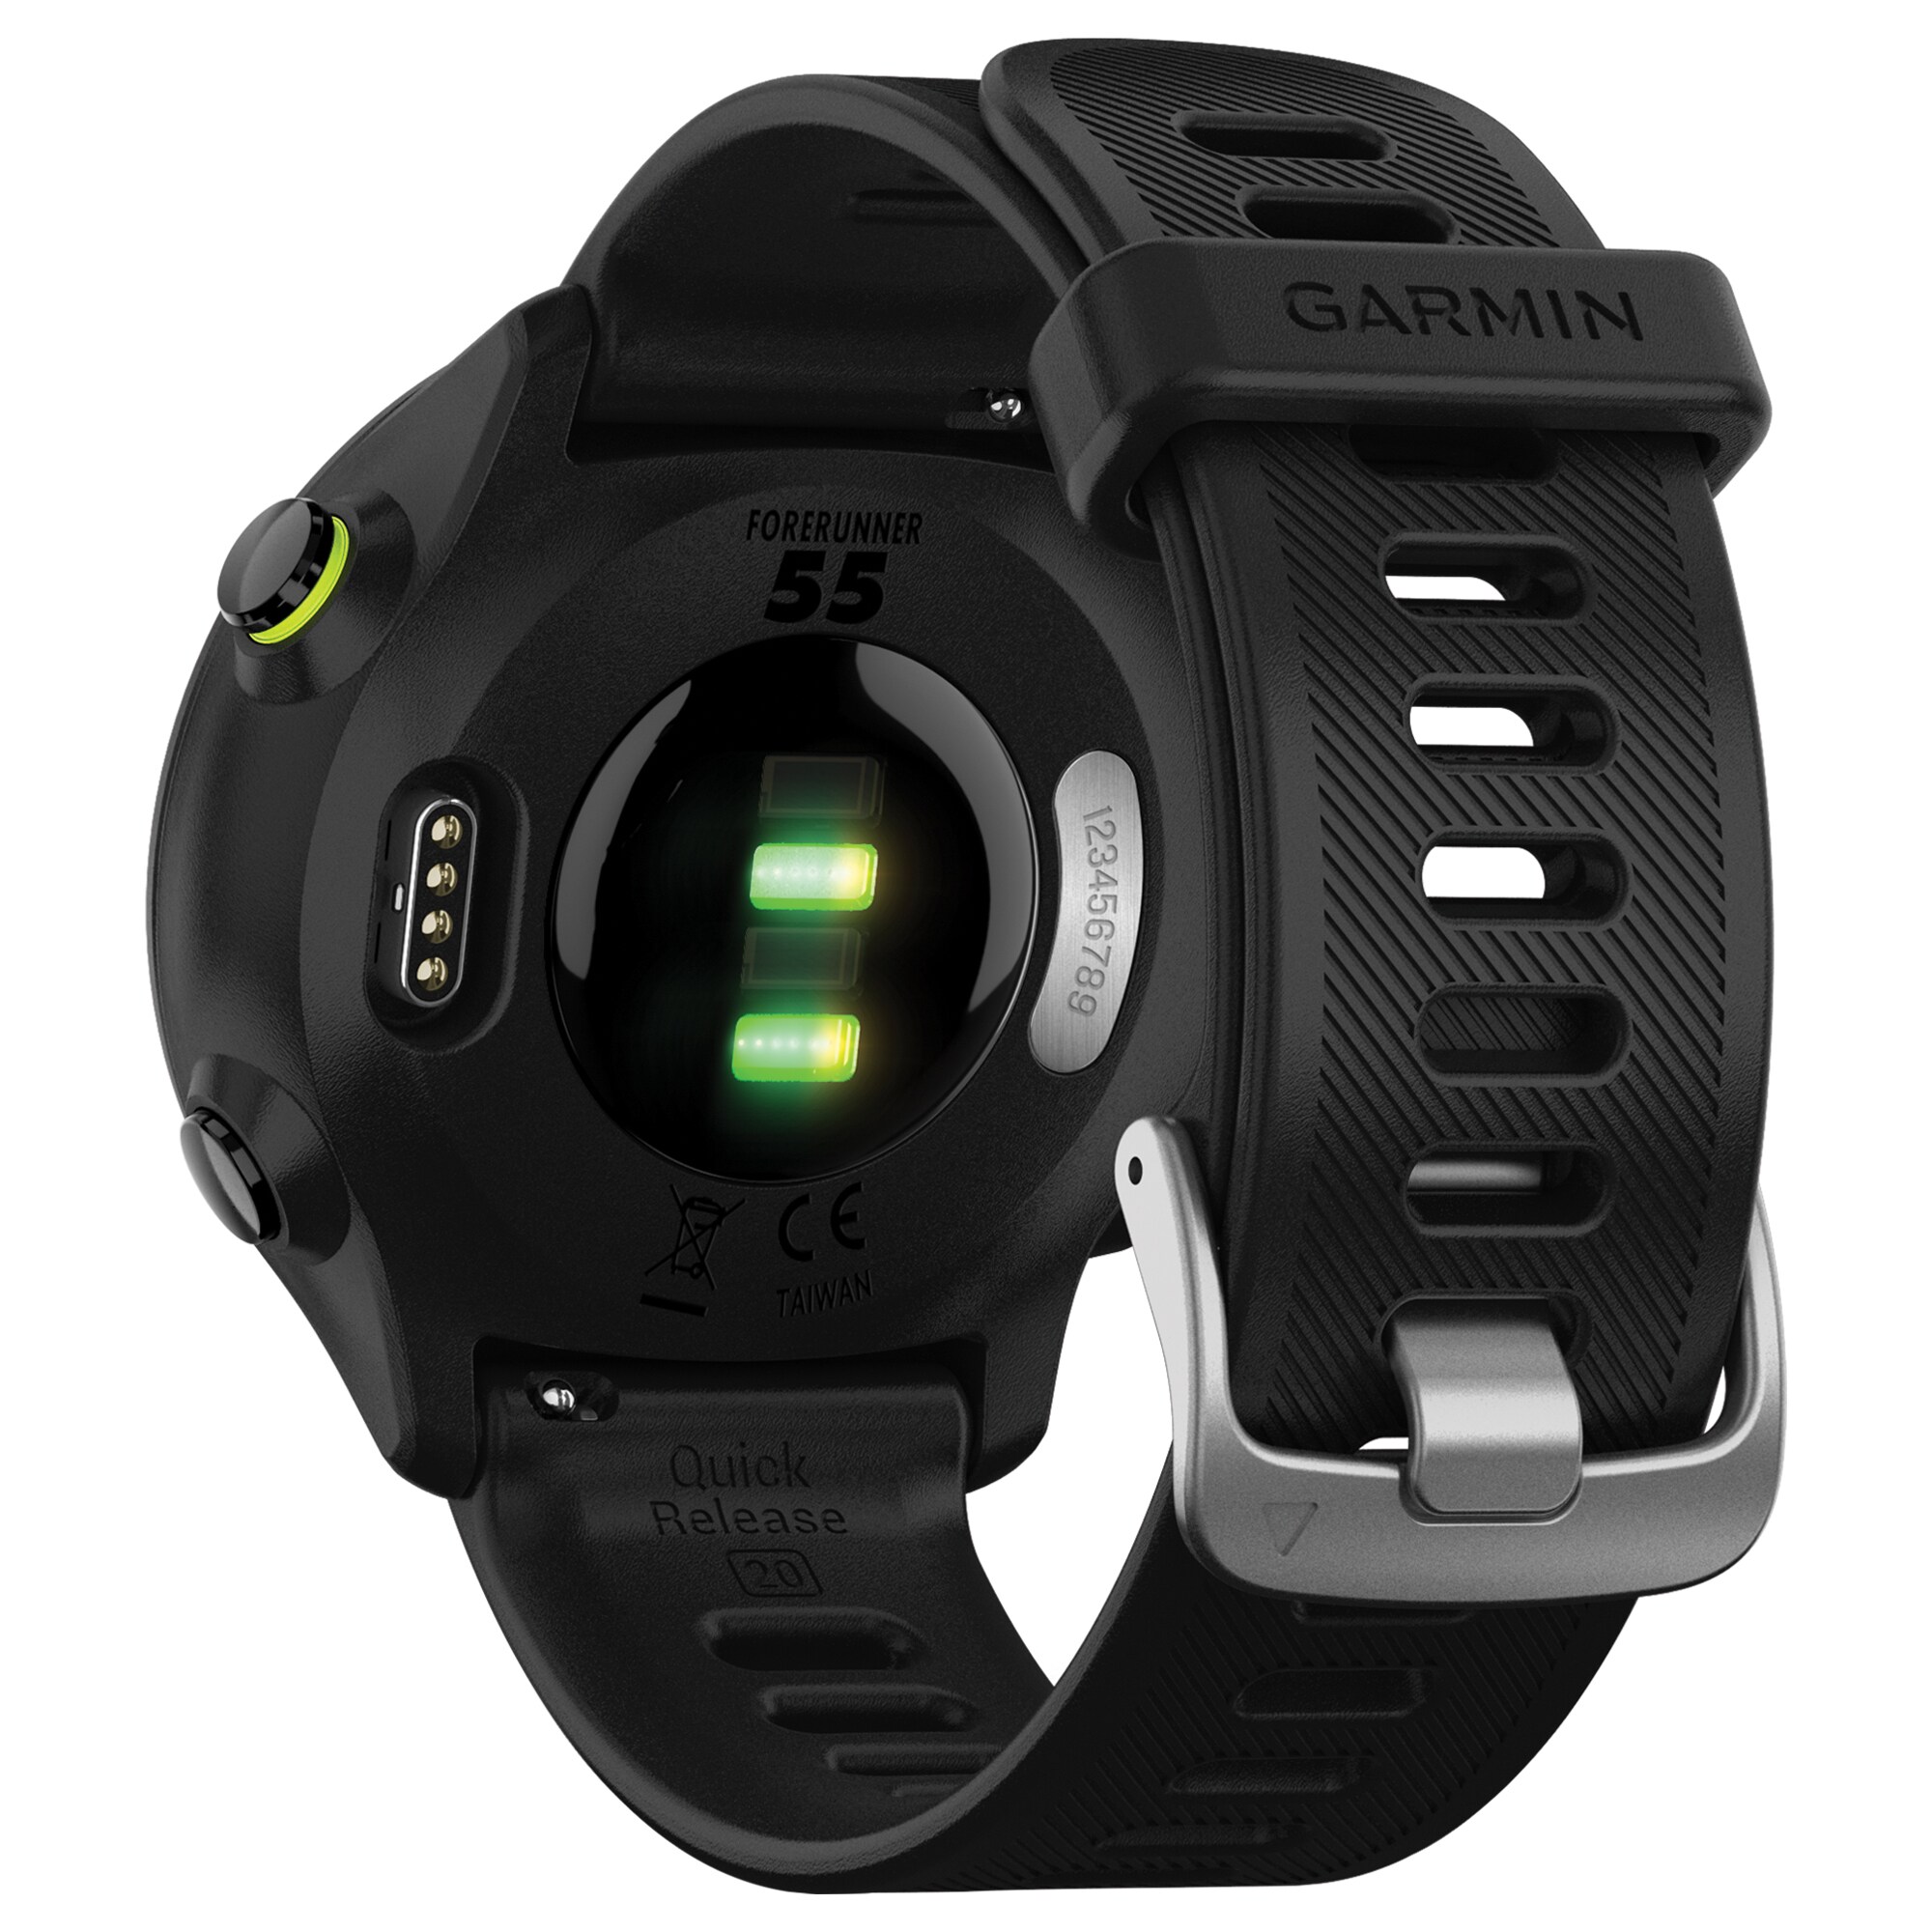 Garmin Forerunner 55 Running Watch (Black) in the Fitness Trackers